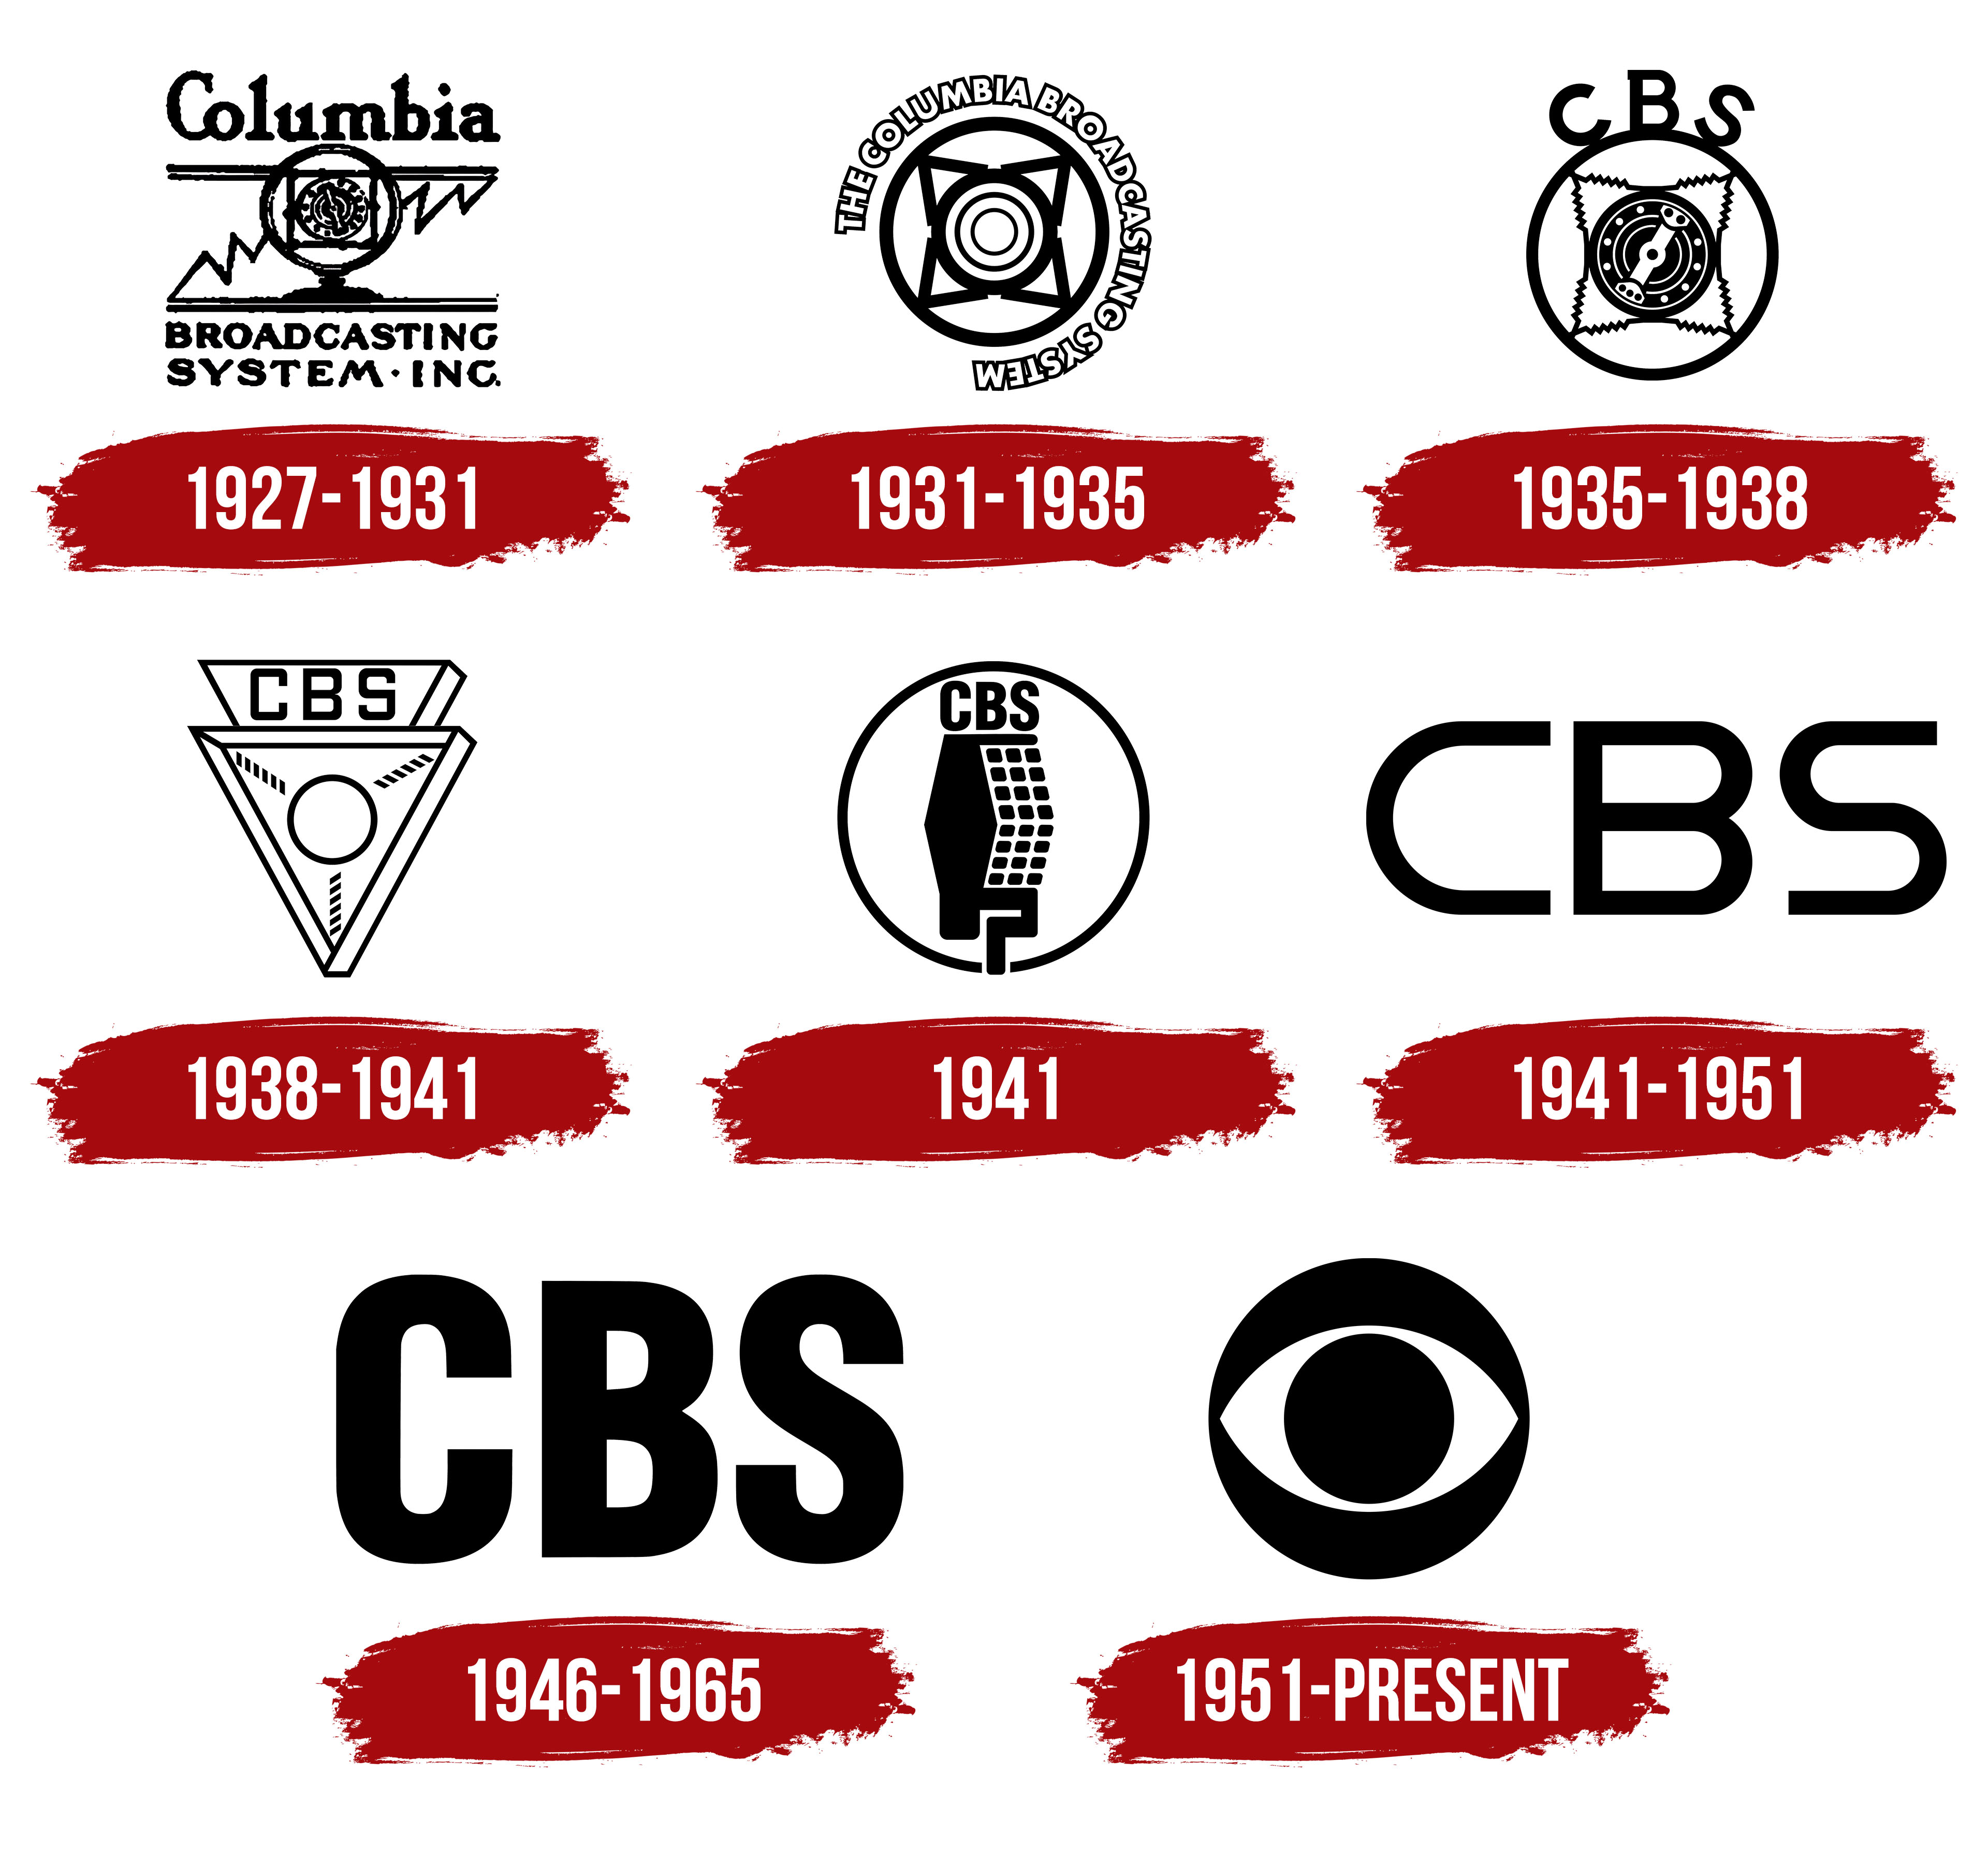 cbs news stations logos